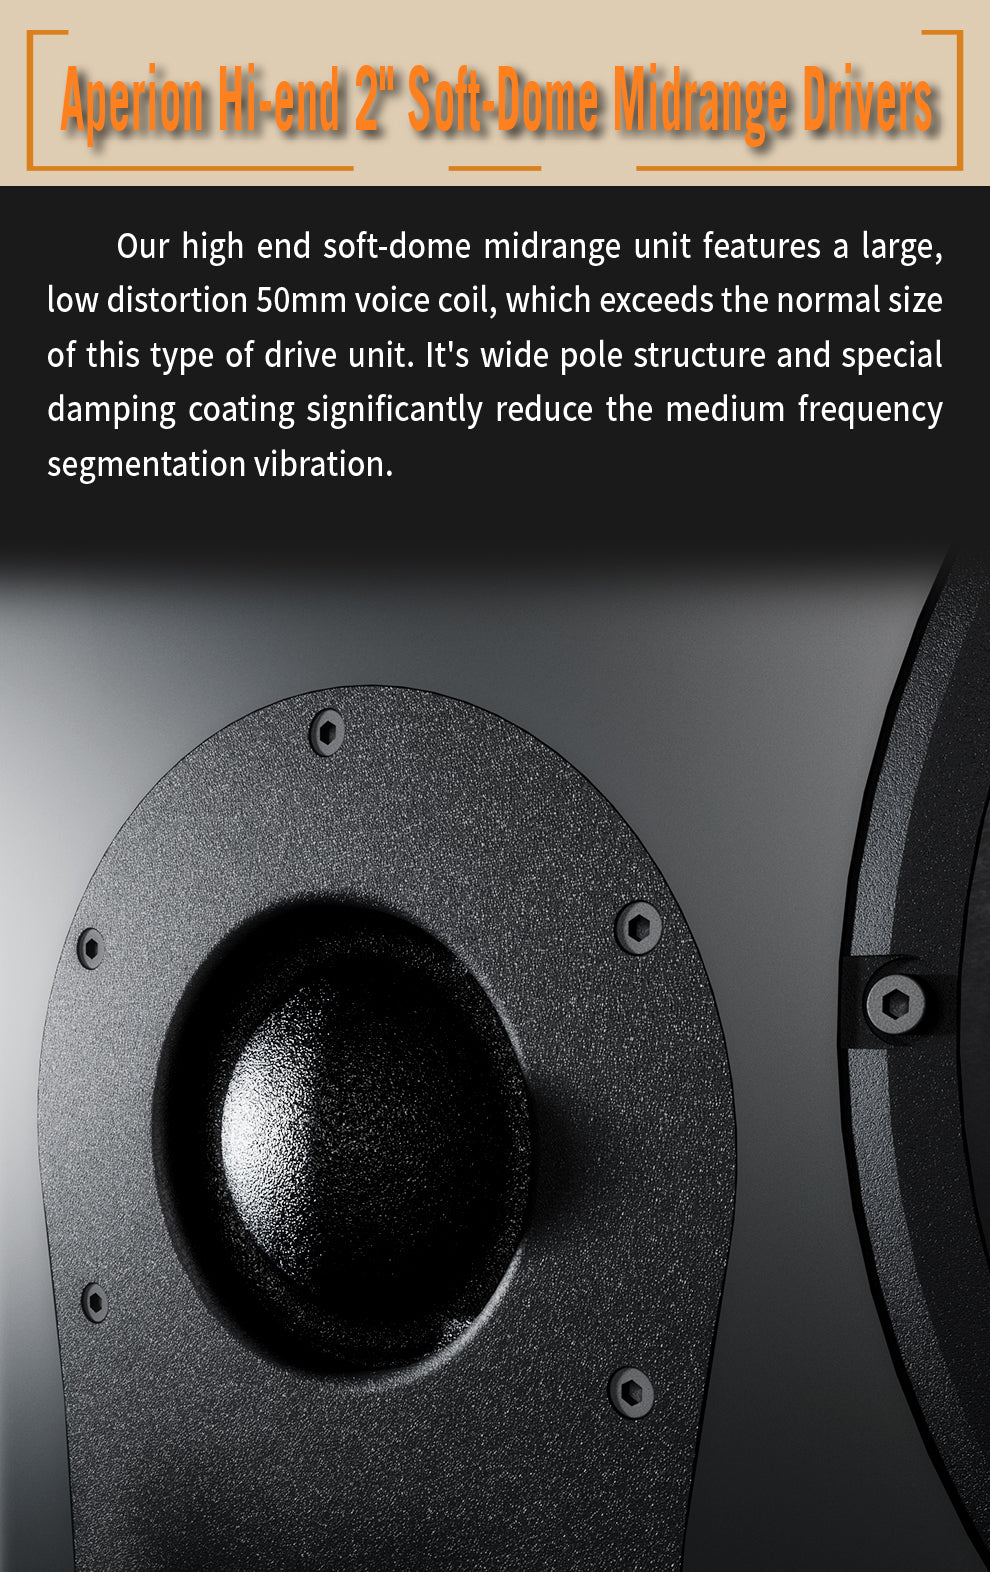 Aperionaudio Theatrus T80S Slim Cinema/Studio AMT Ribbon Tweeter Monitor Speaker